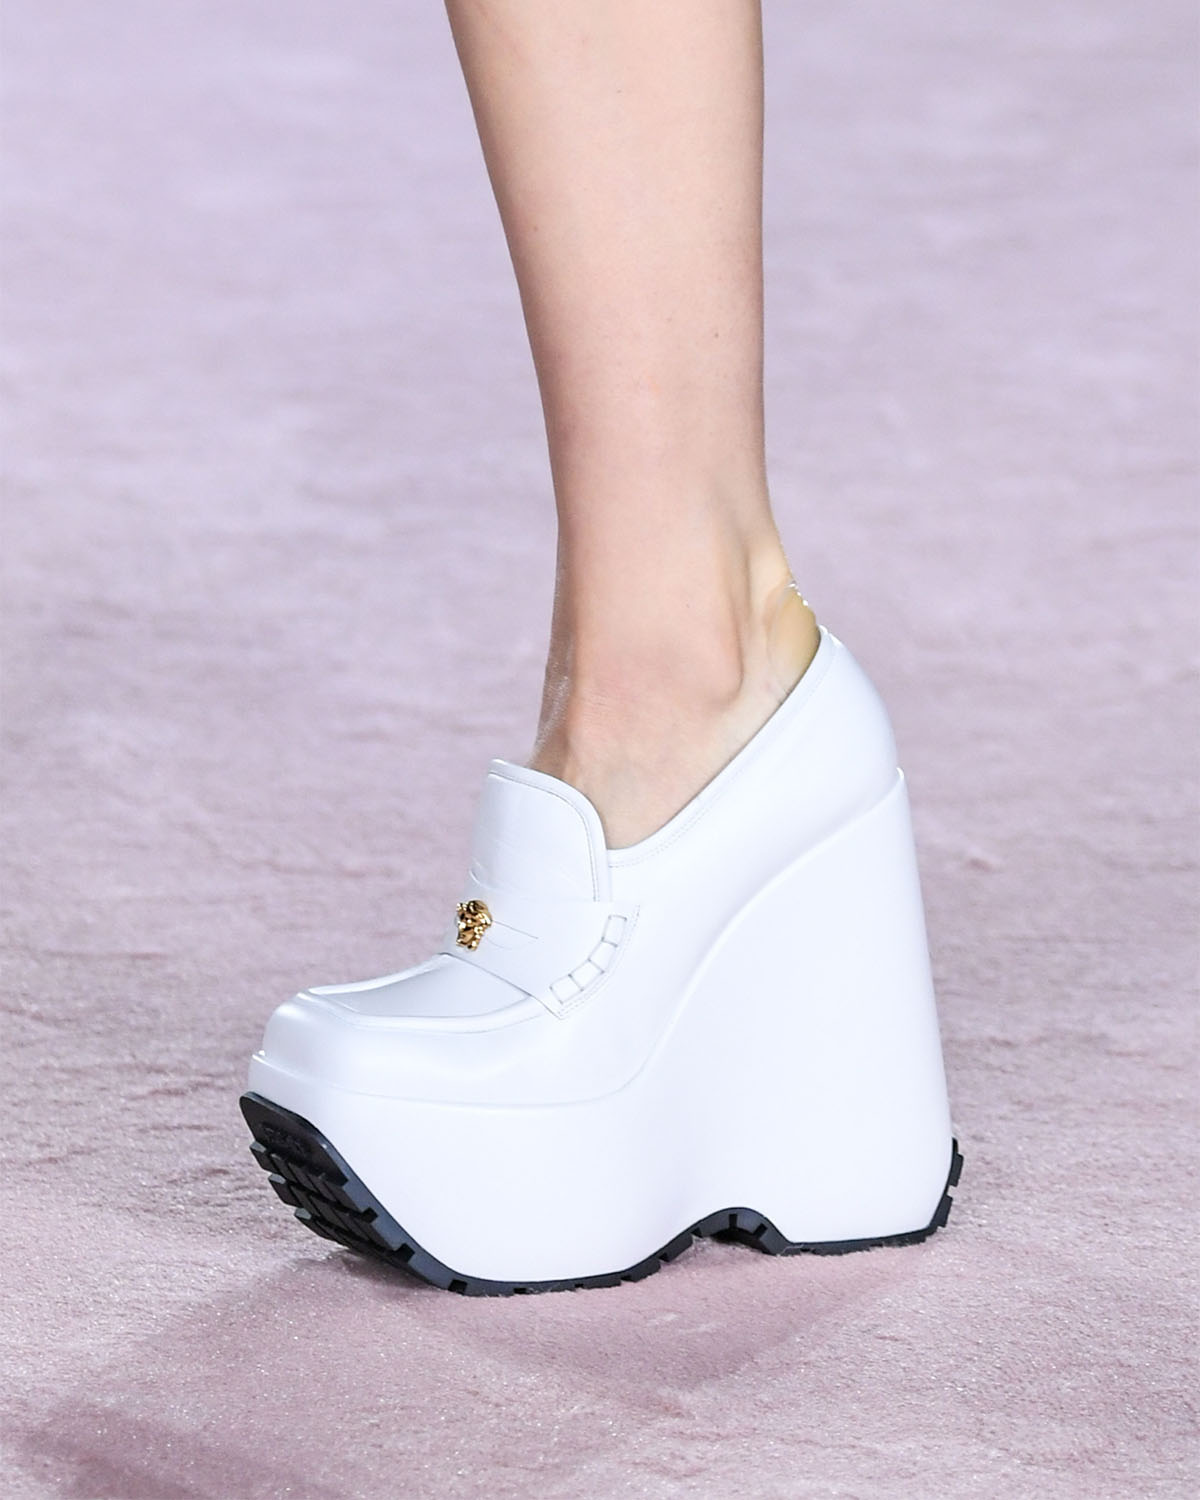 Spring/Summer 2022 Shoe Trends: High Heels Are Back